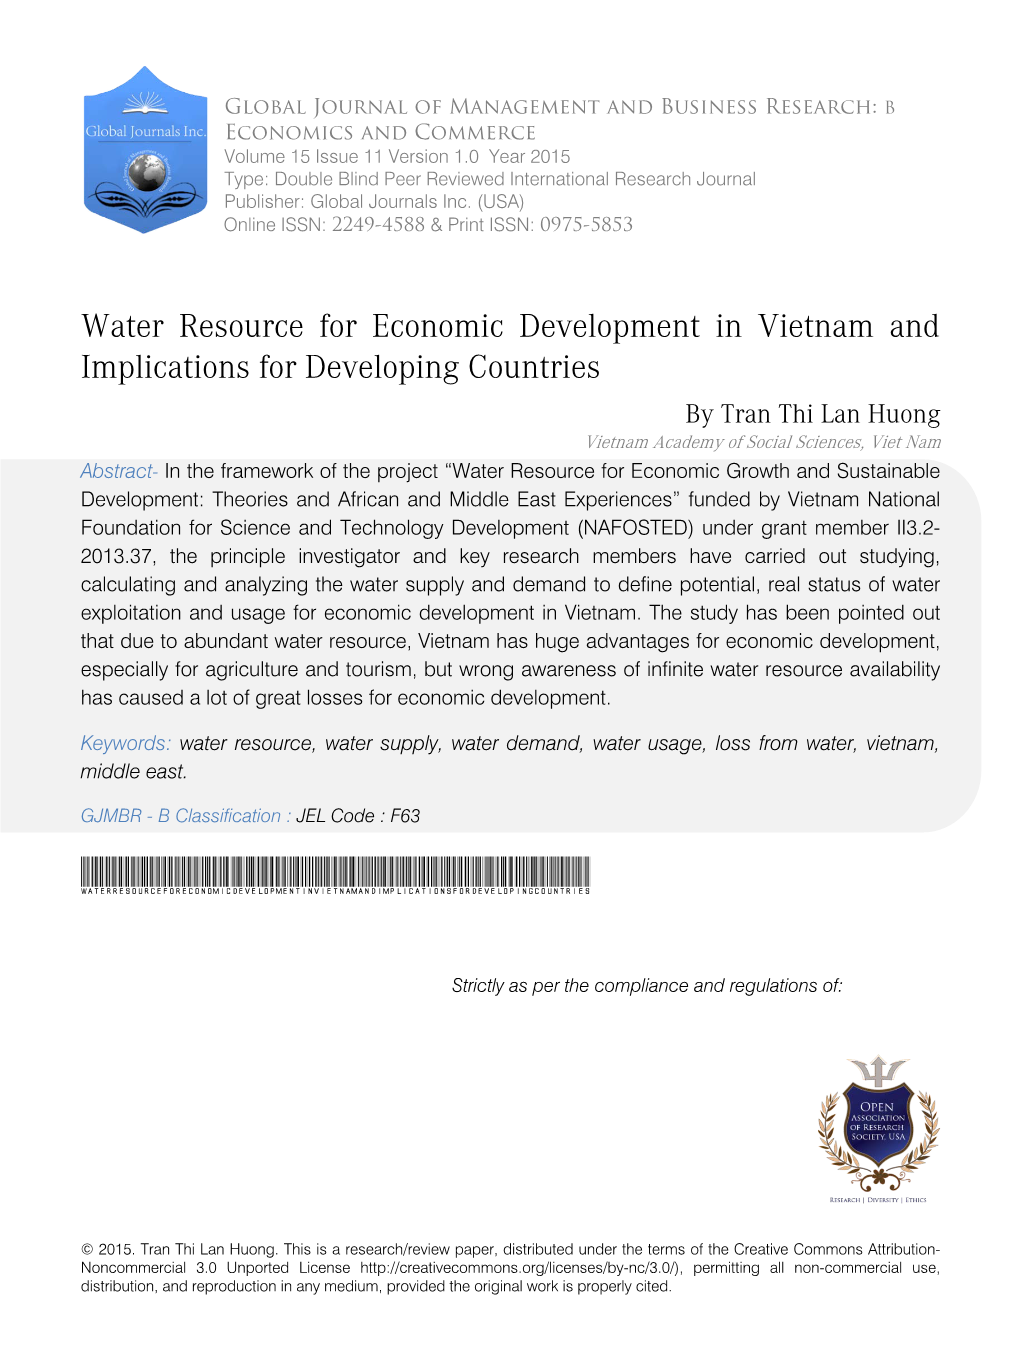 Water Resource for Economic Development in Vietnam And